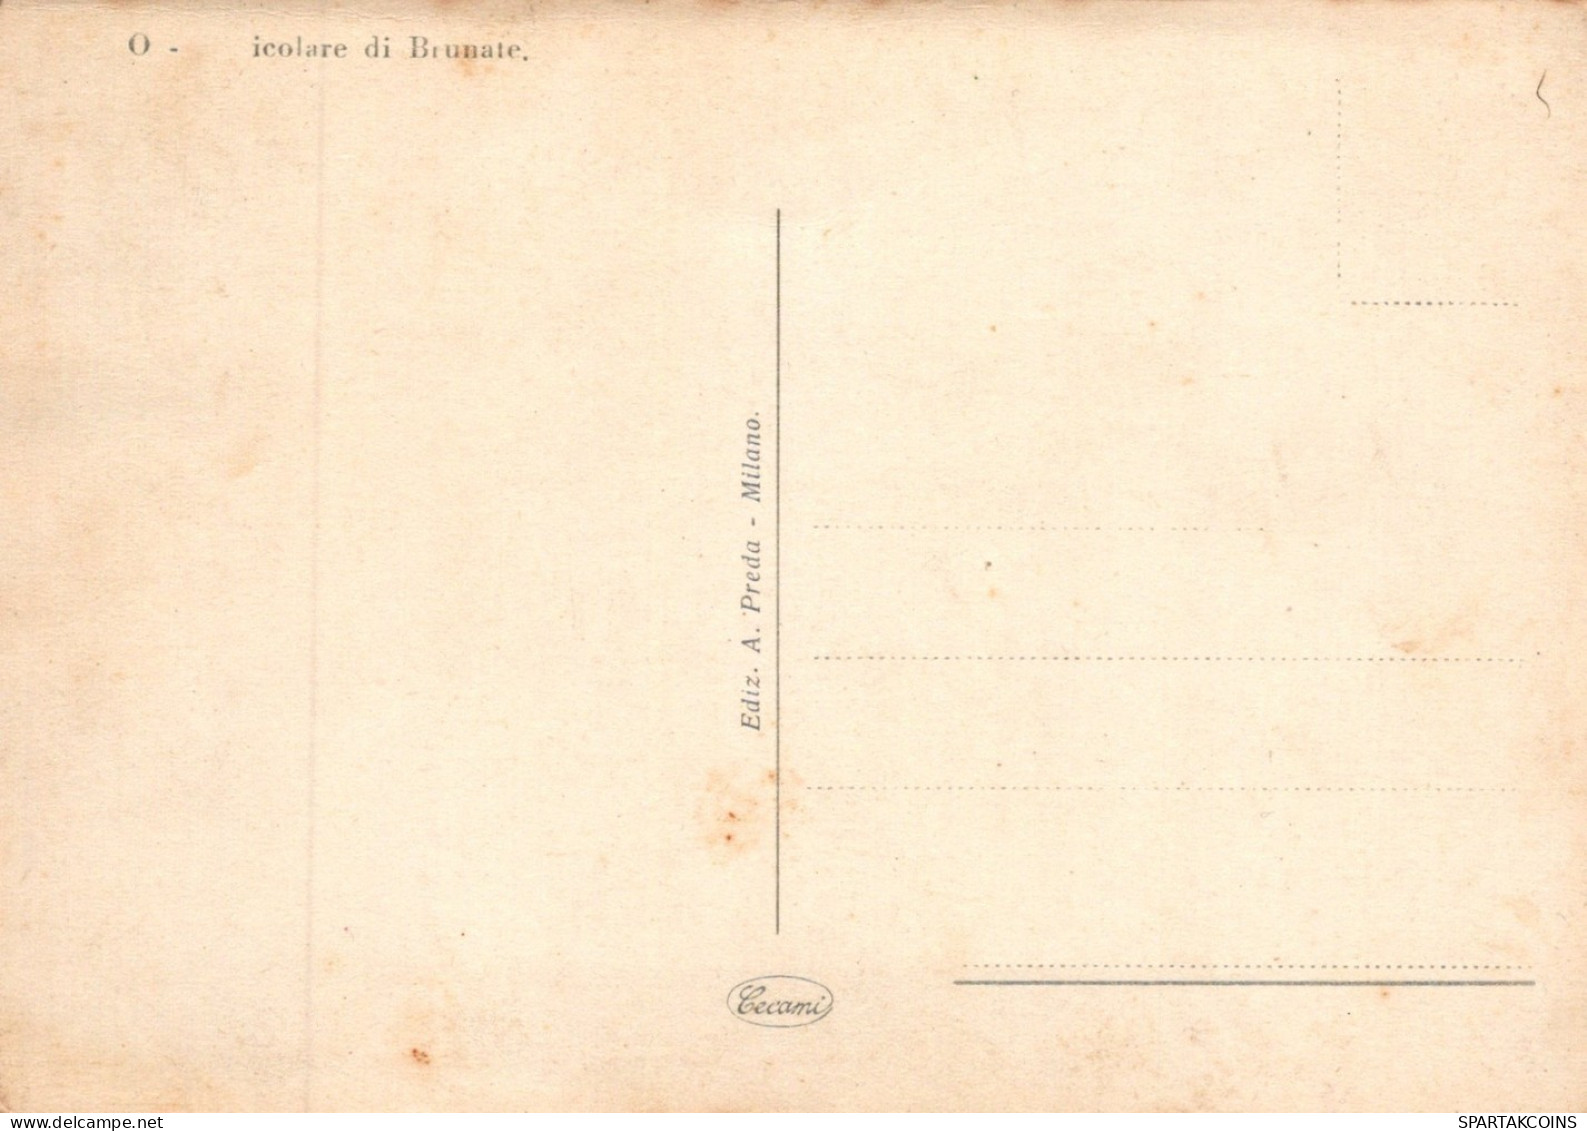 TREN TRANSPORTE Ferroviario Vintage Tarjeta Postal CPSM #PAA680.A - Eisenbahnen